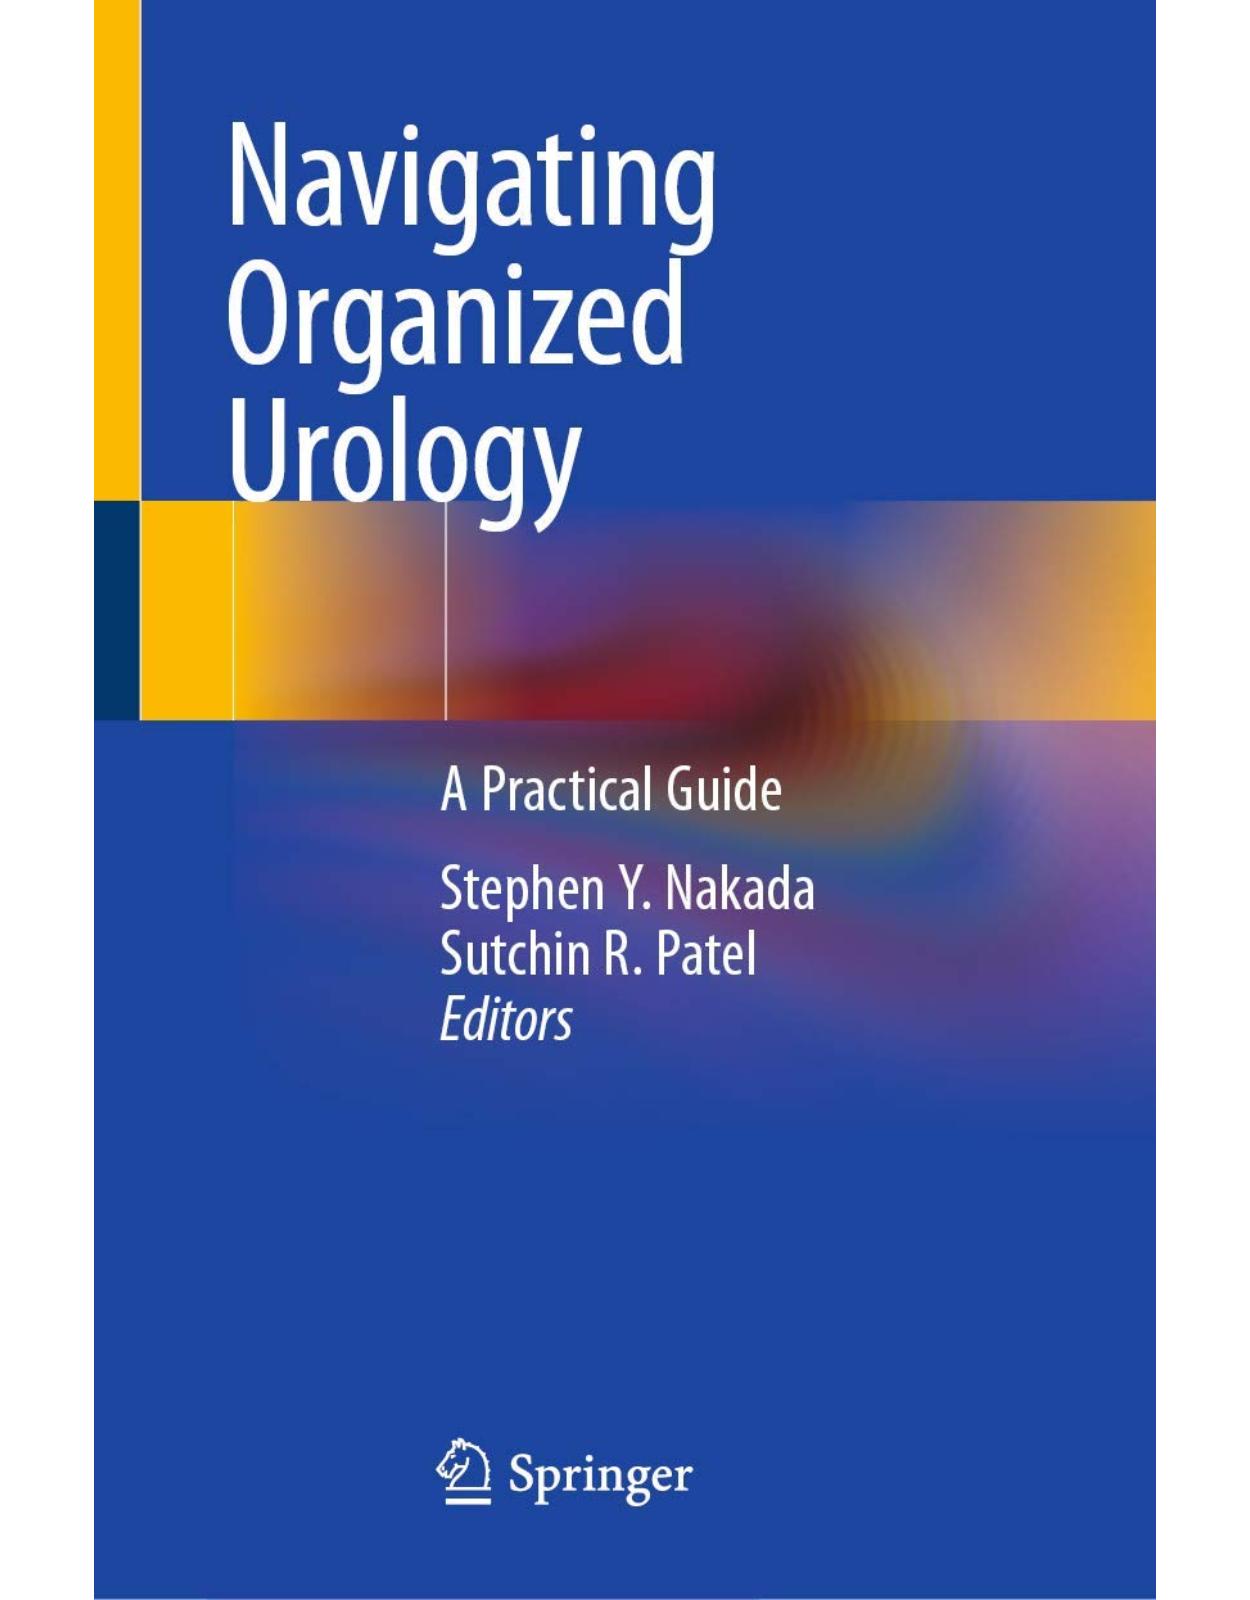 Navigating Organized Urology: A Practical Guide 